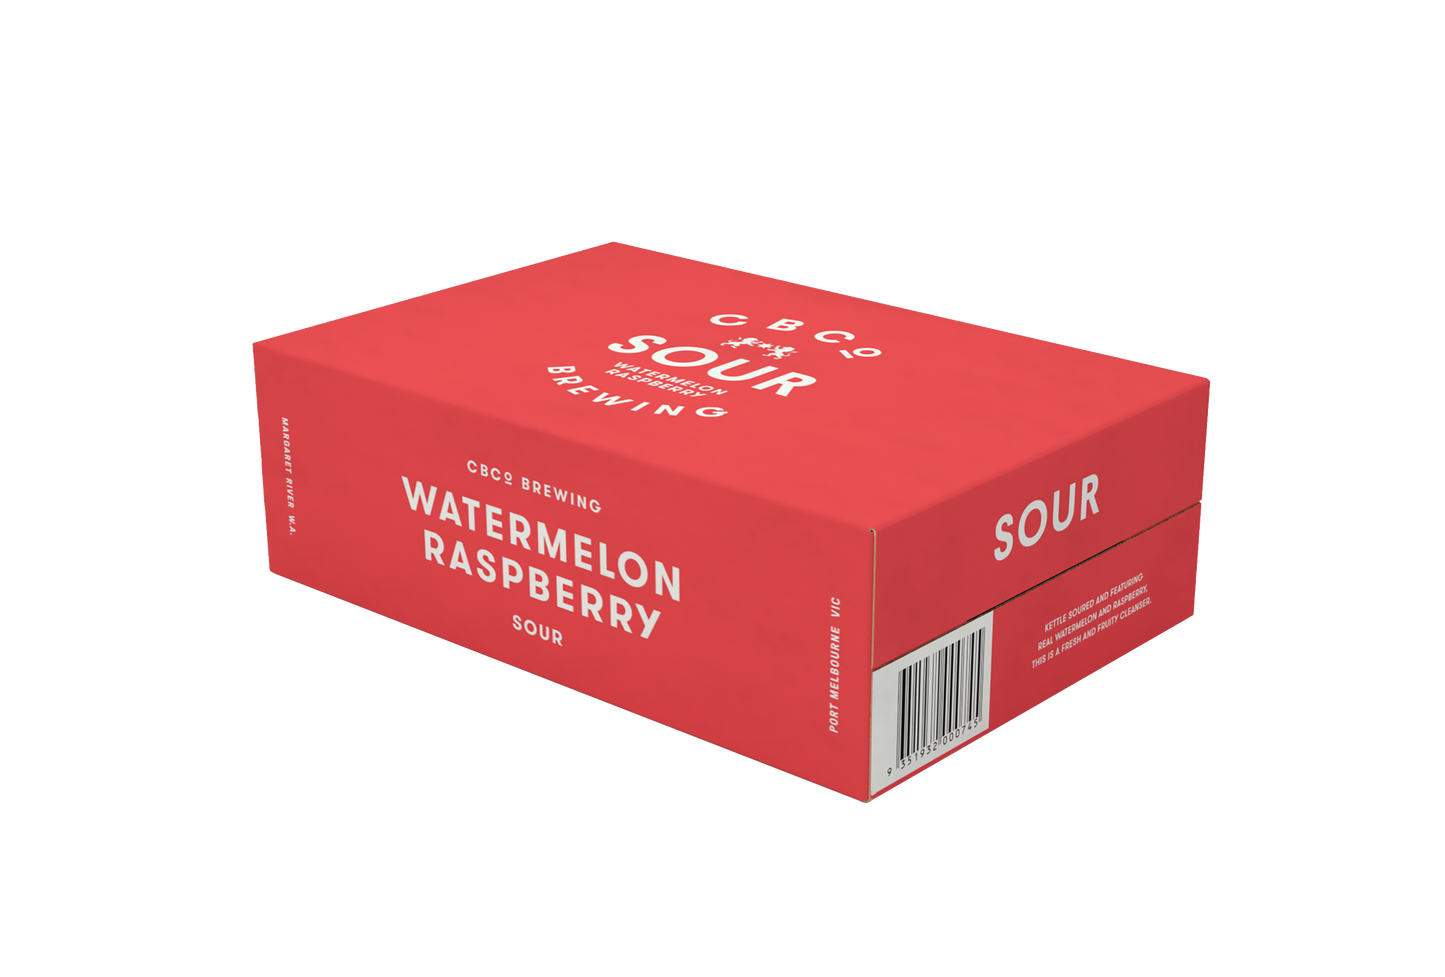 South West Sour Watermelon Raspberry